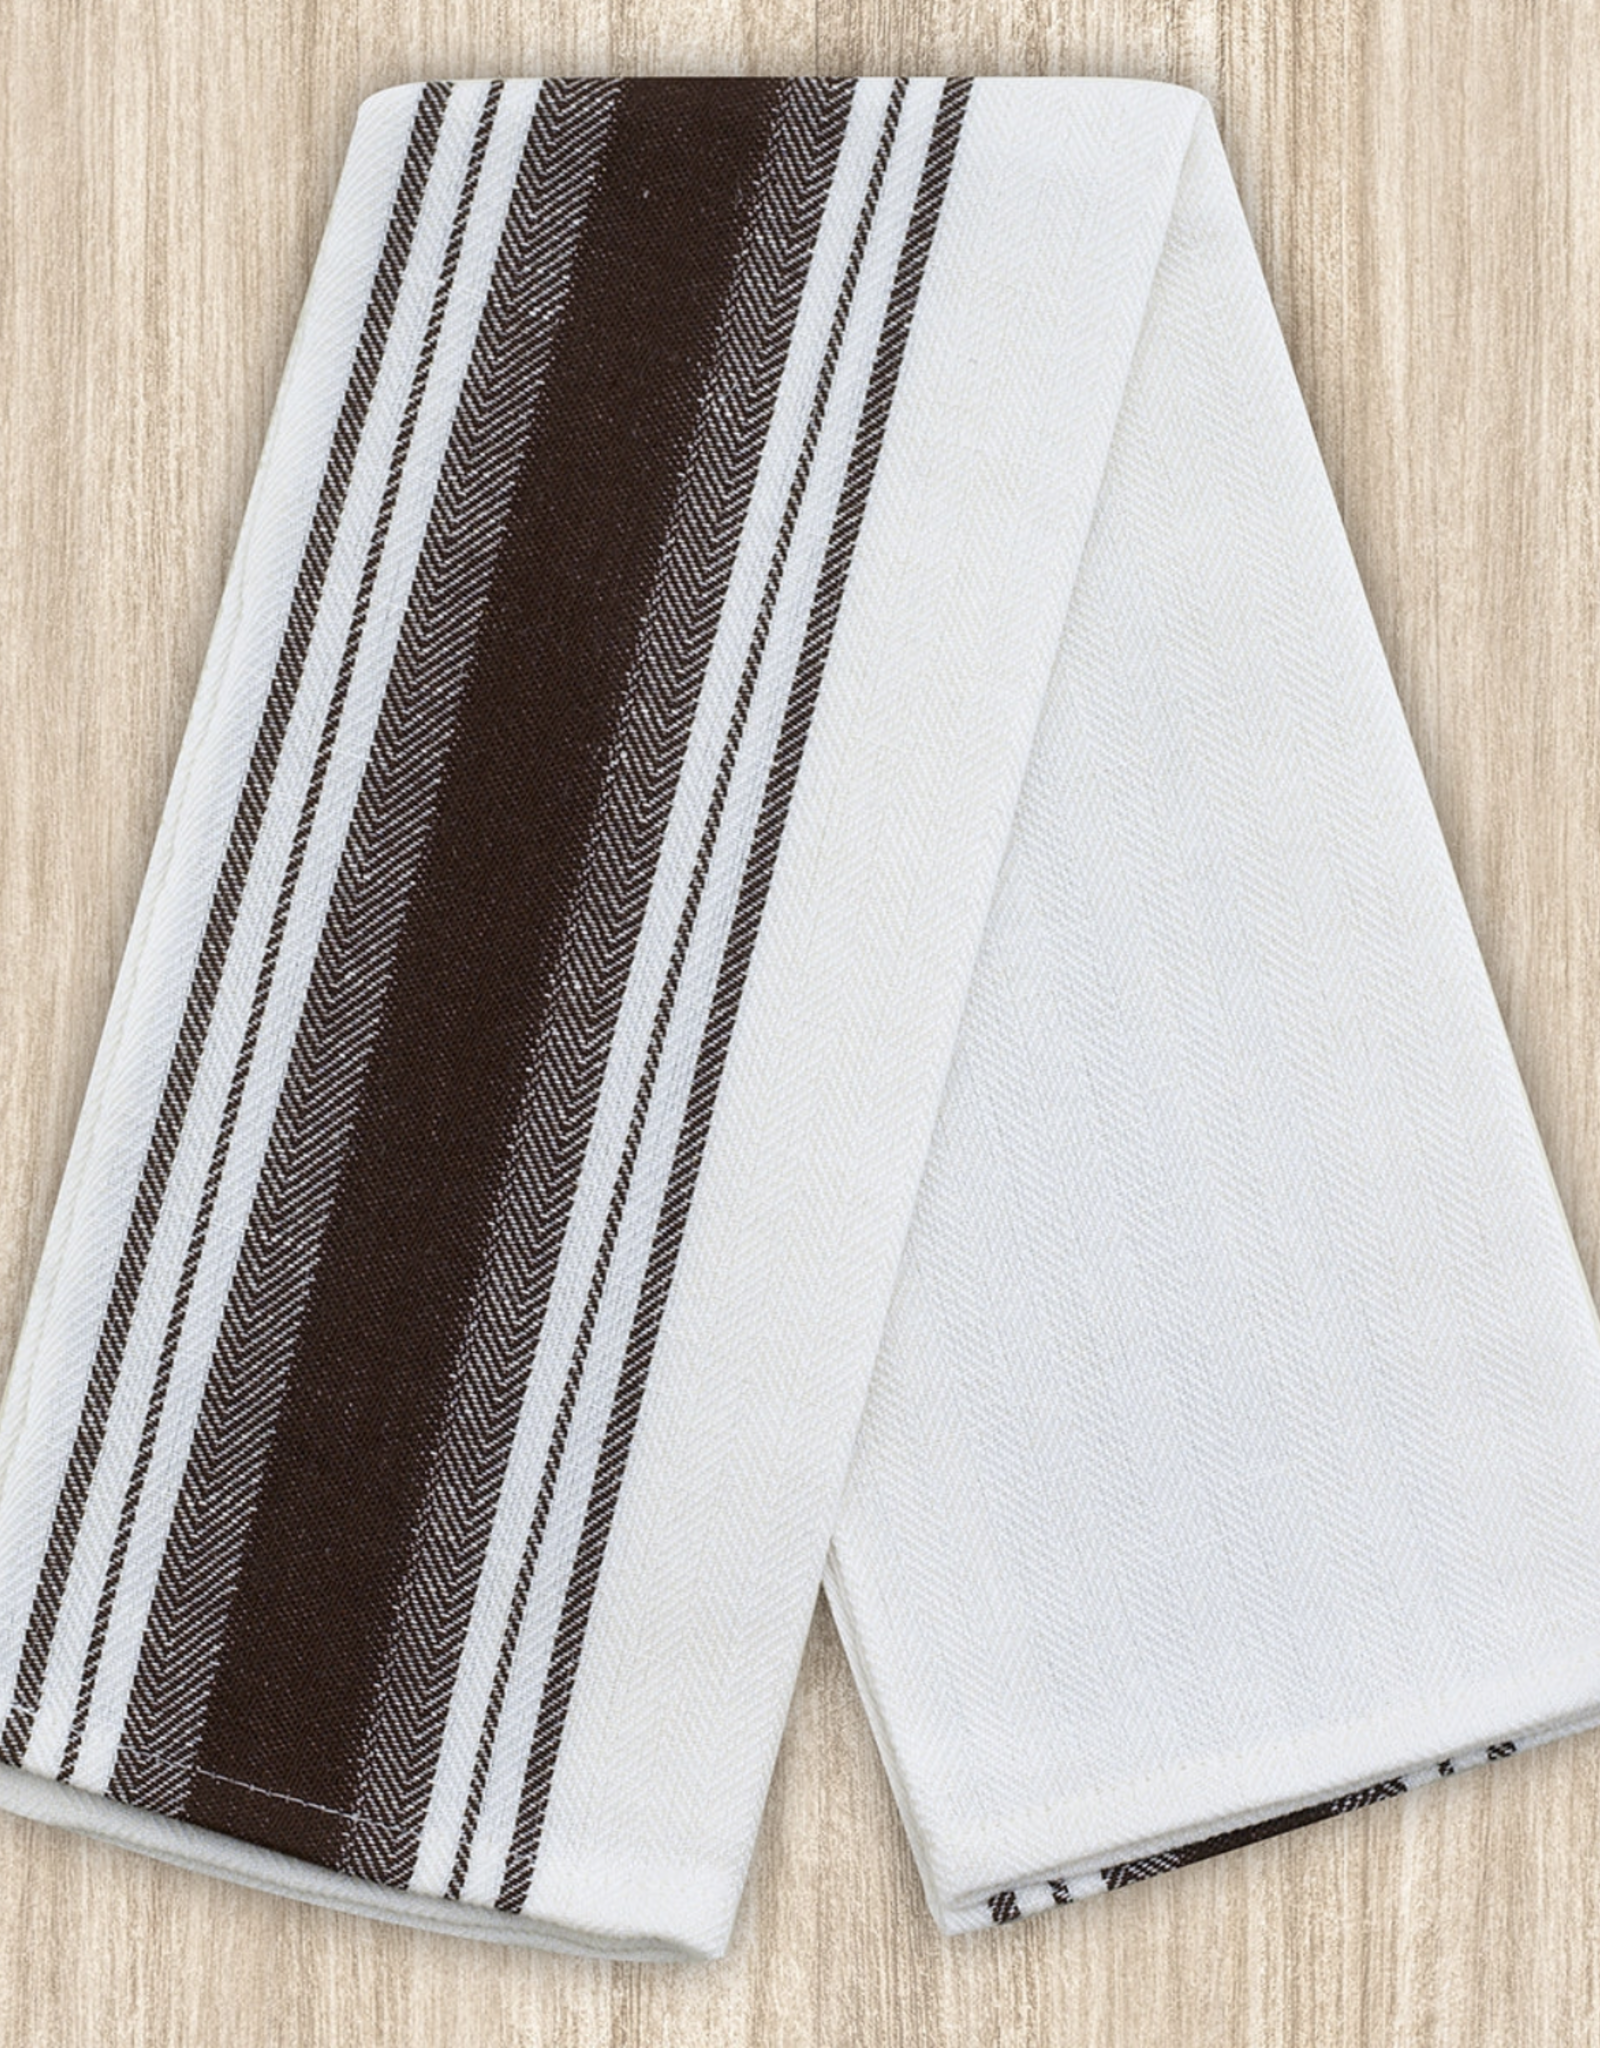 Busatti Italy Busatti Due Fragole - Kitchen towel  (Color - Chocolate Brown) 60% Linen 40% Cotton